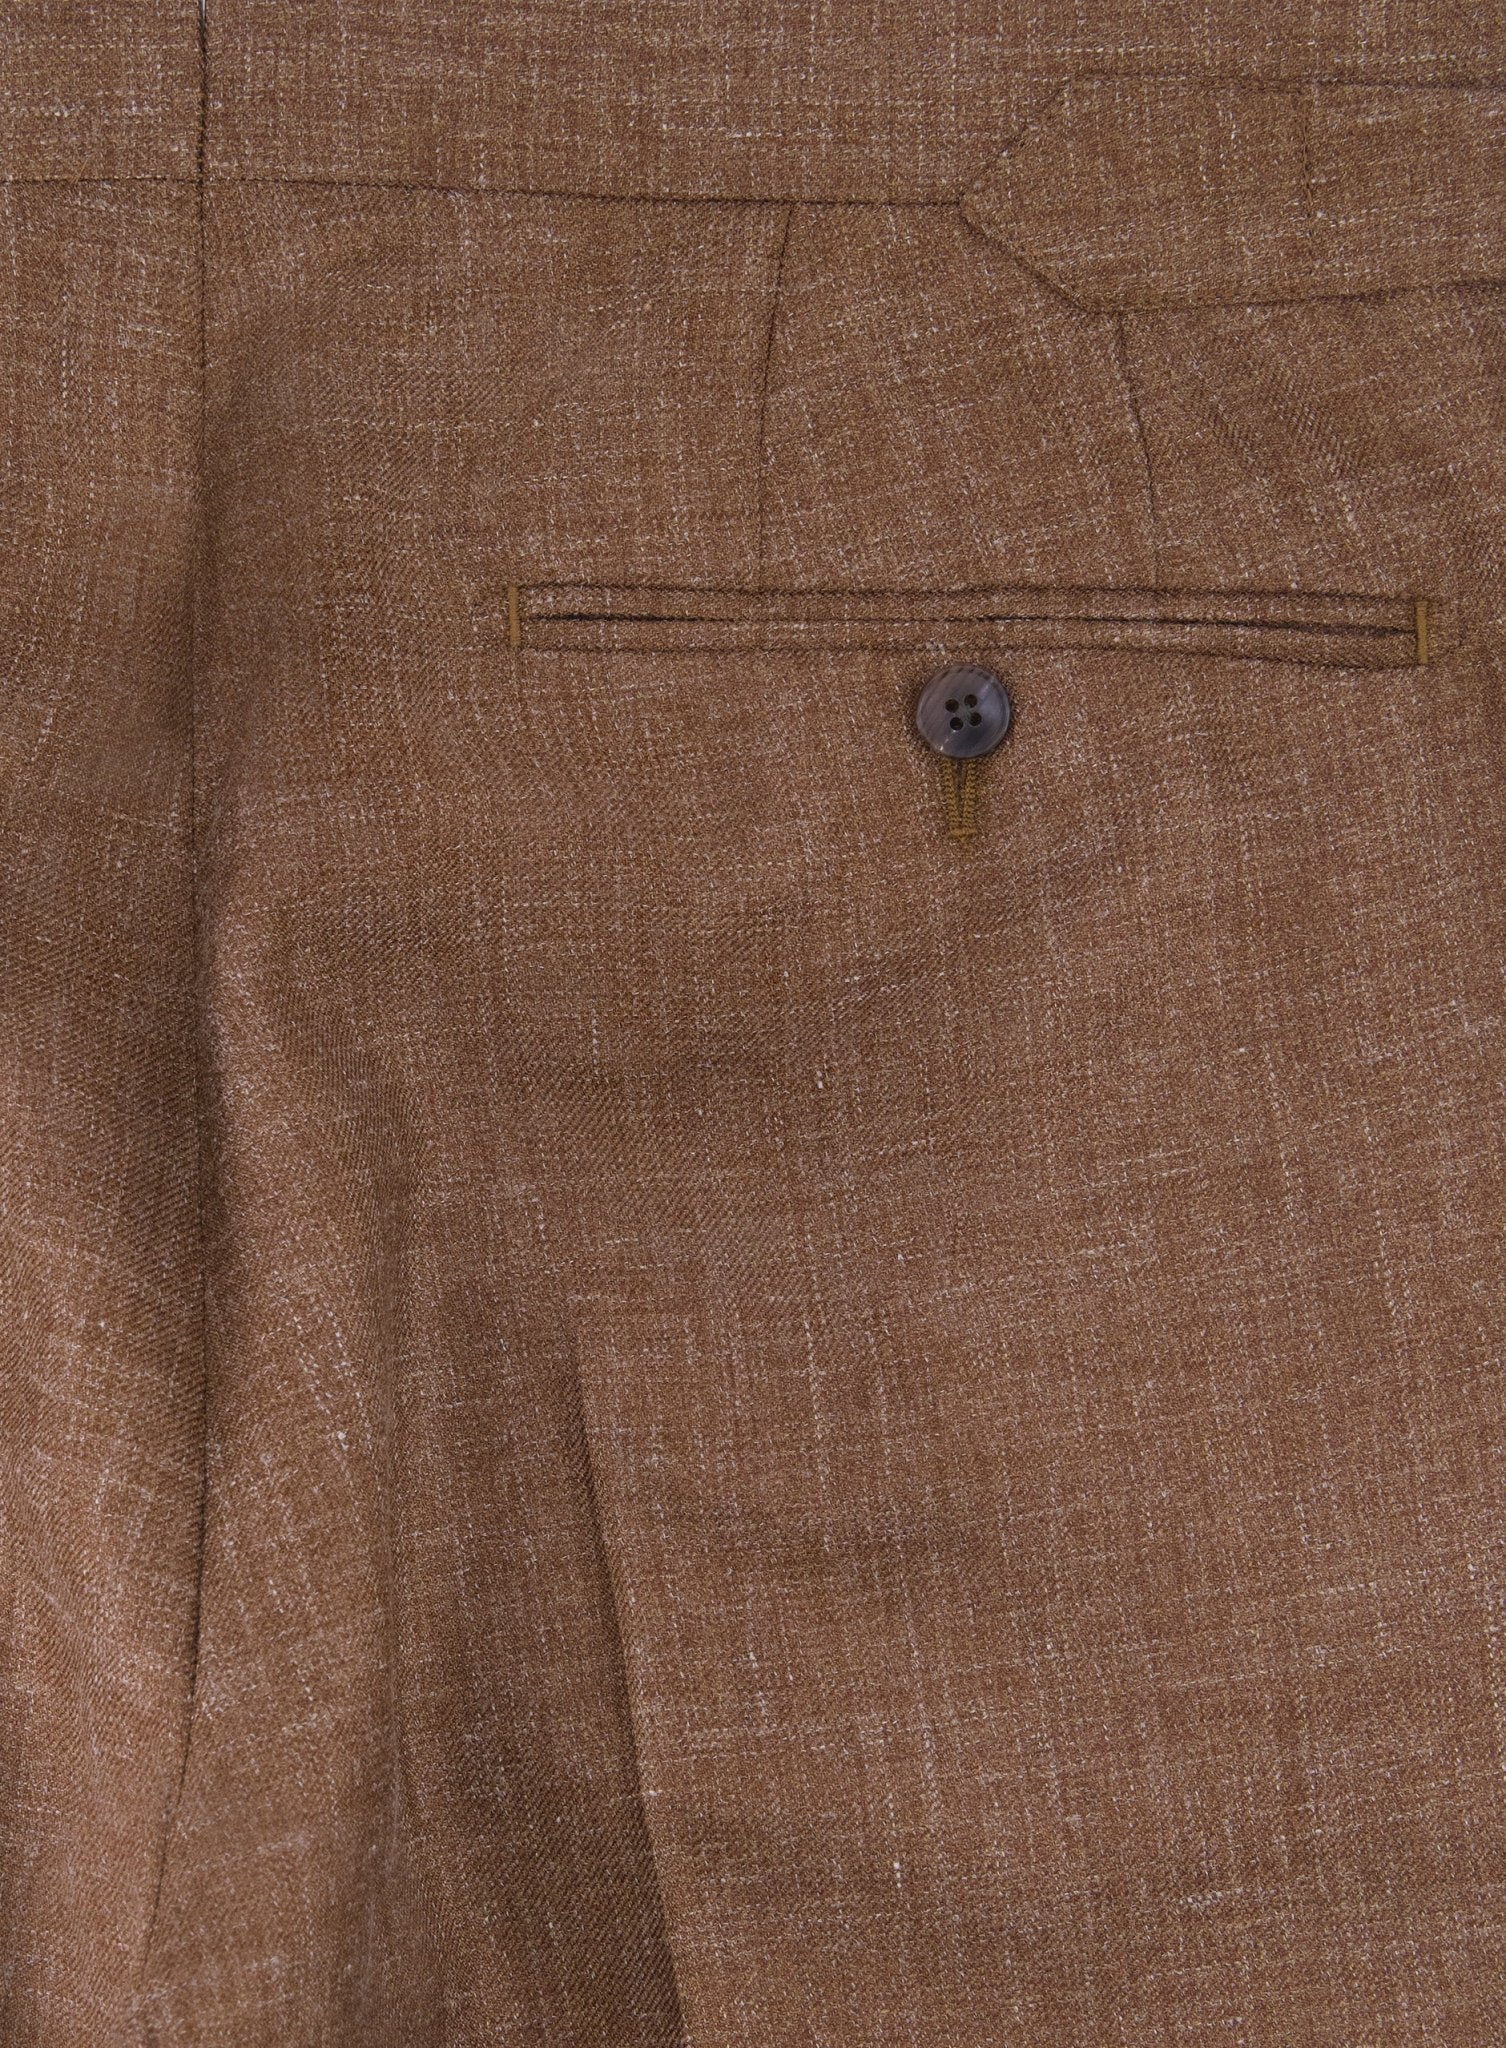 Pantalon van wol, zijde en linnen | Roest